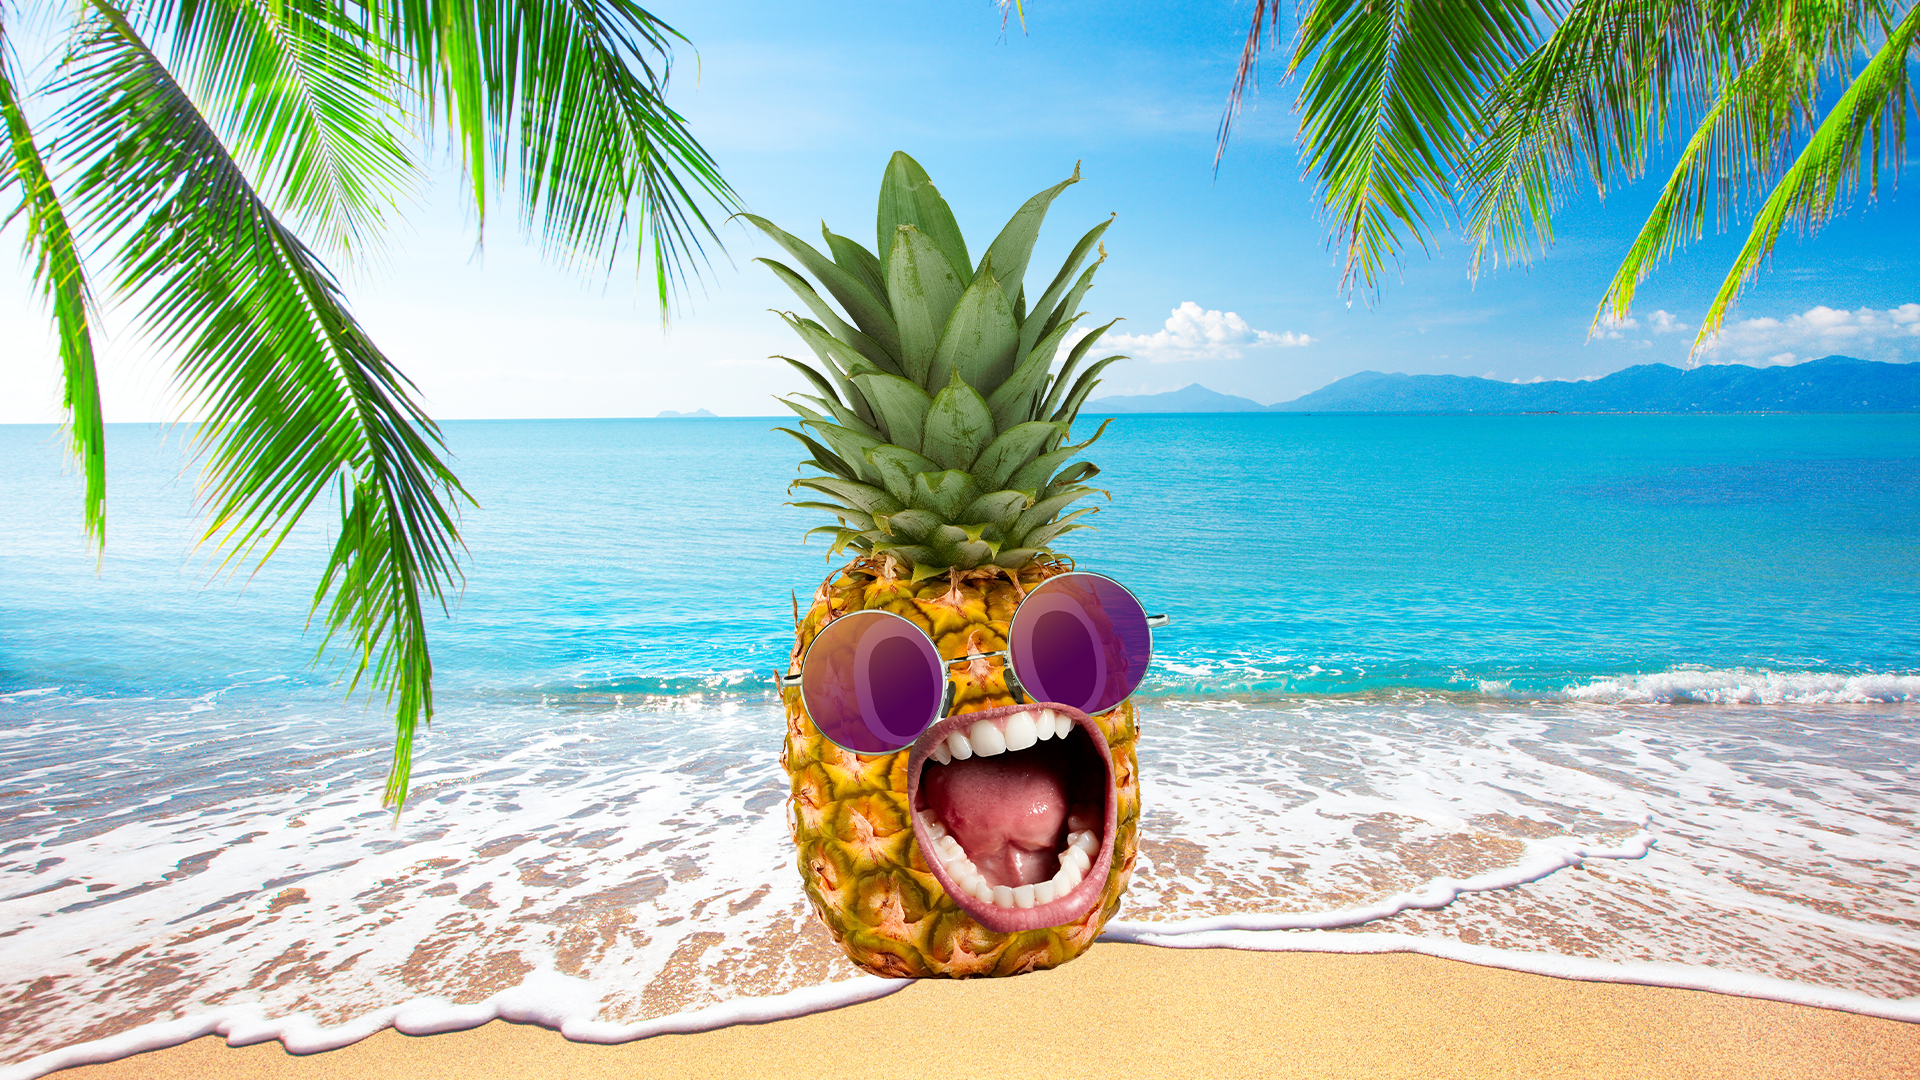 Screaming pineapple on a tropical beach